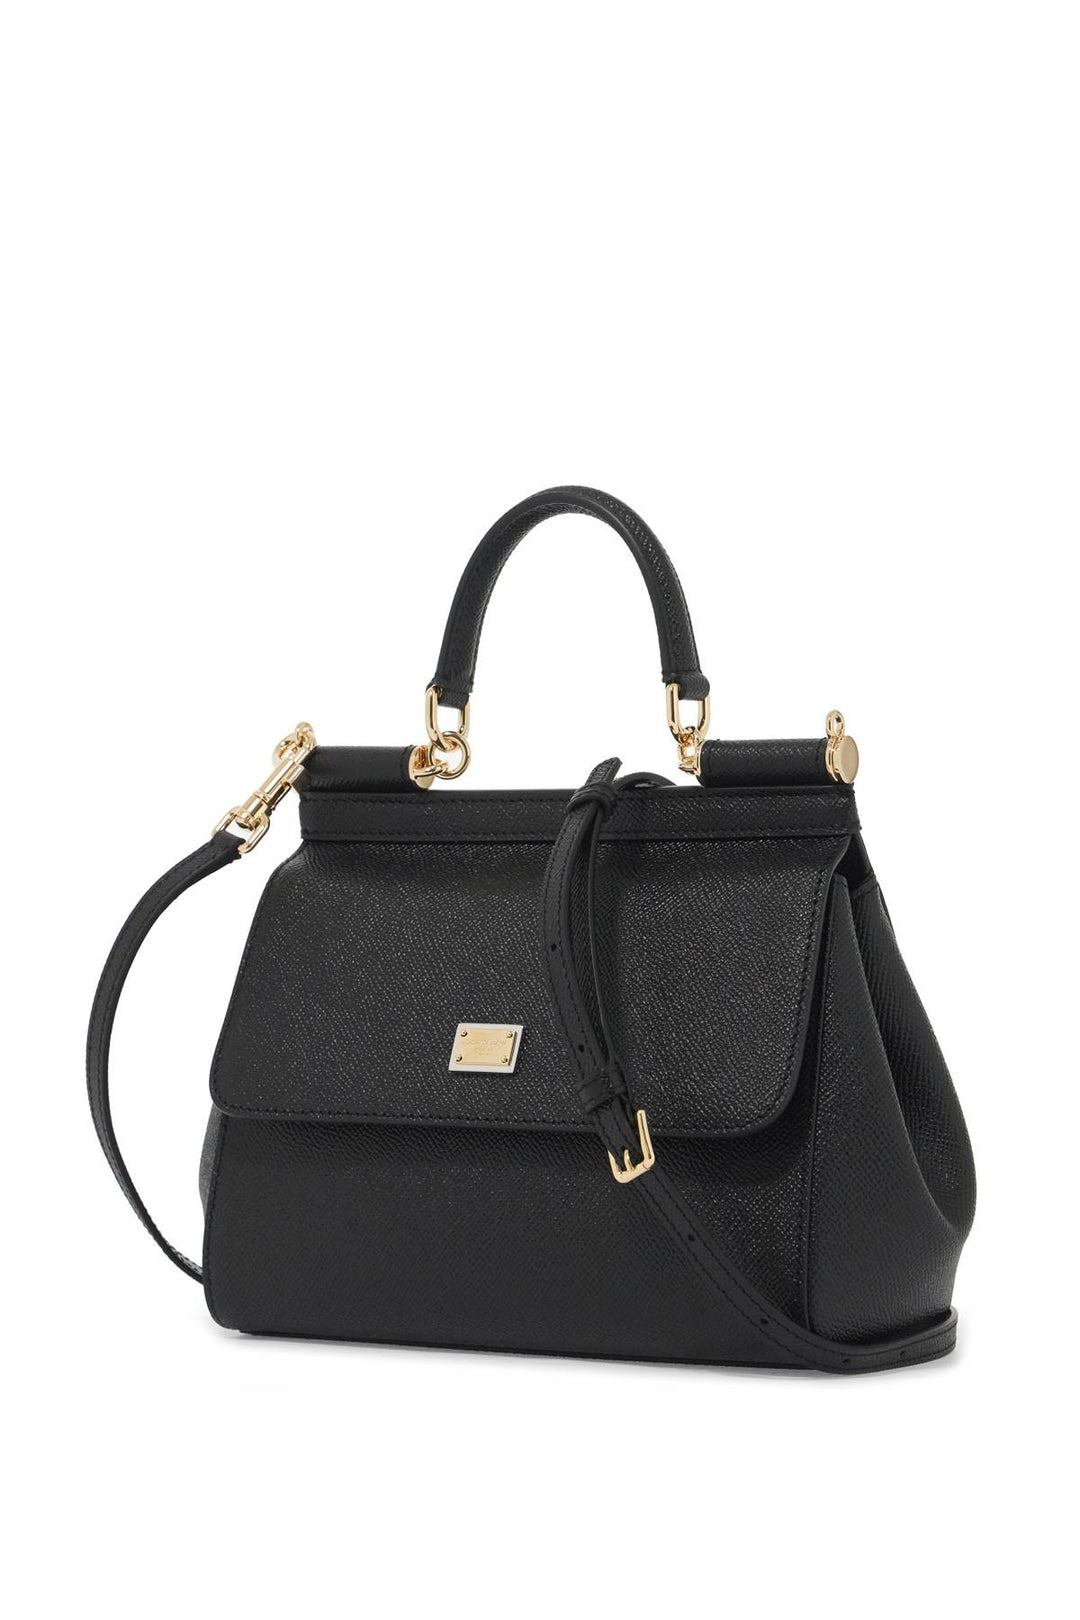 Dolce & Gabbana Small Sicily Bag   Black